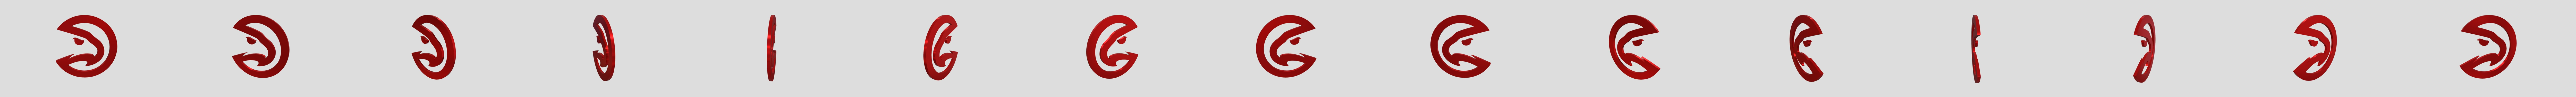 Atlanta Hawks Nba Basketball Team Logo Black 3d Designed Allover